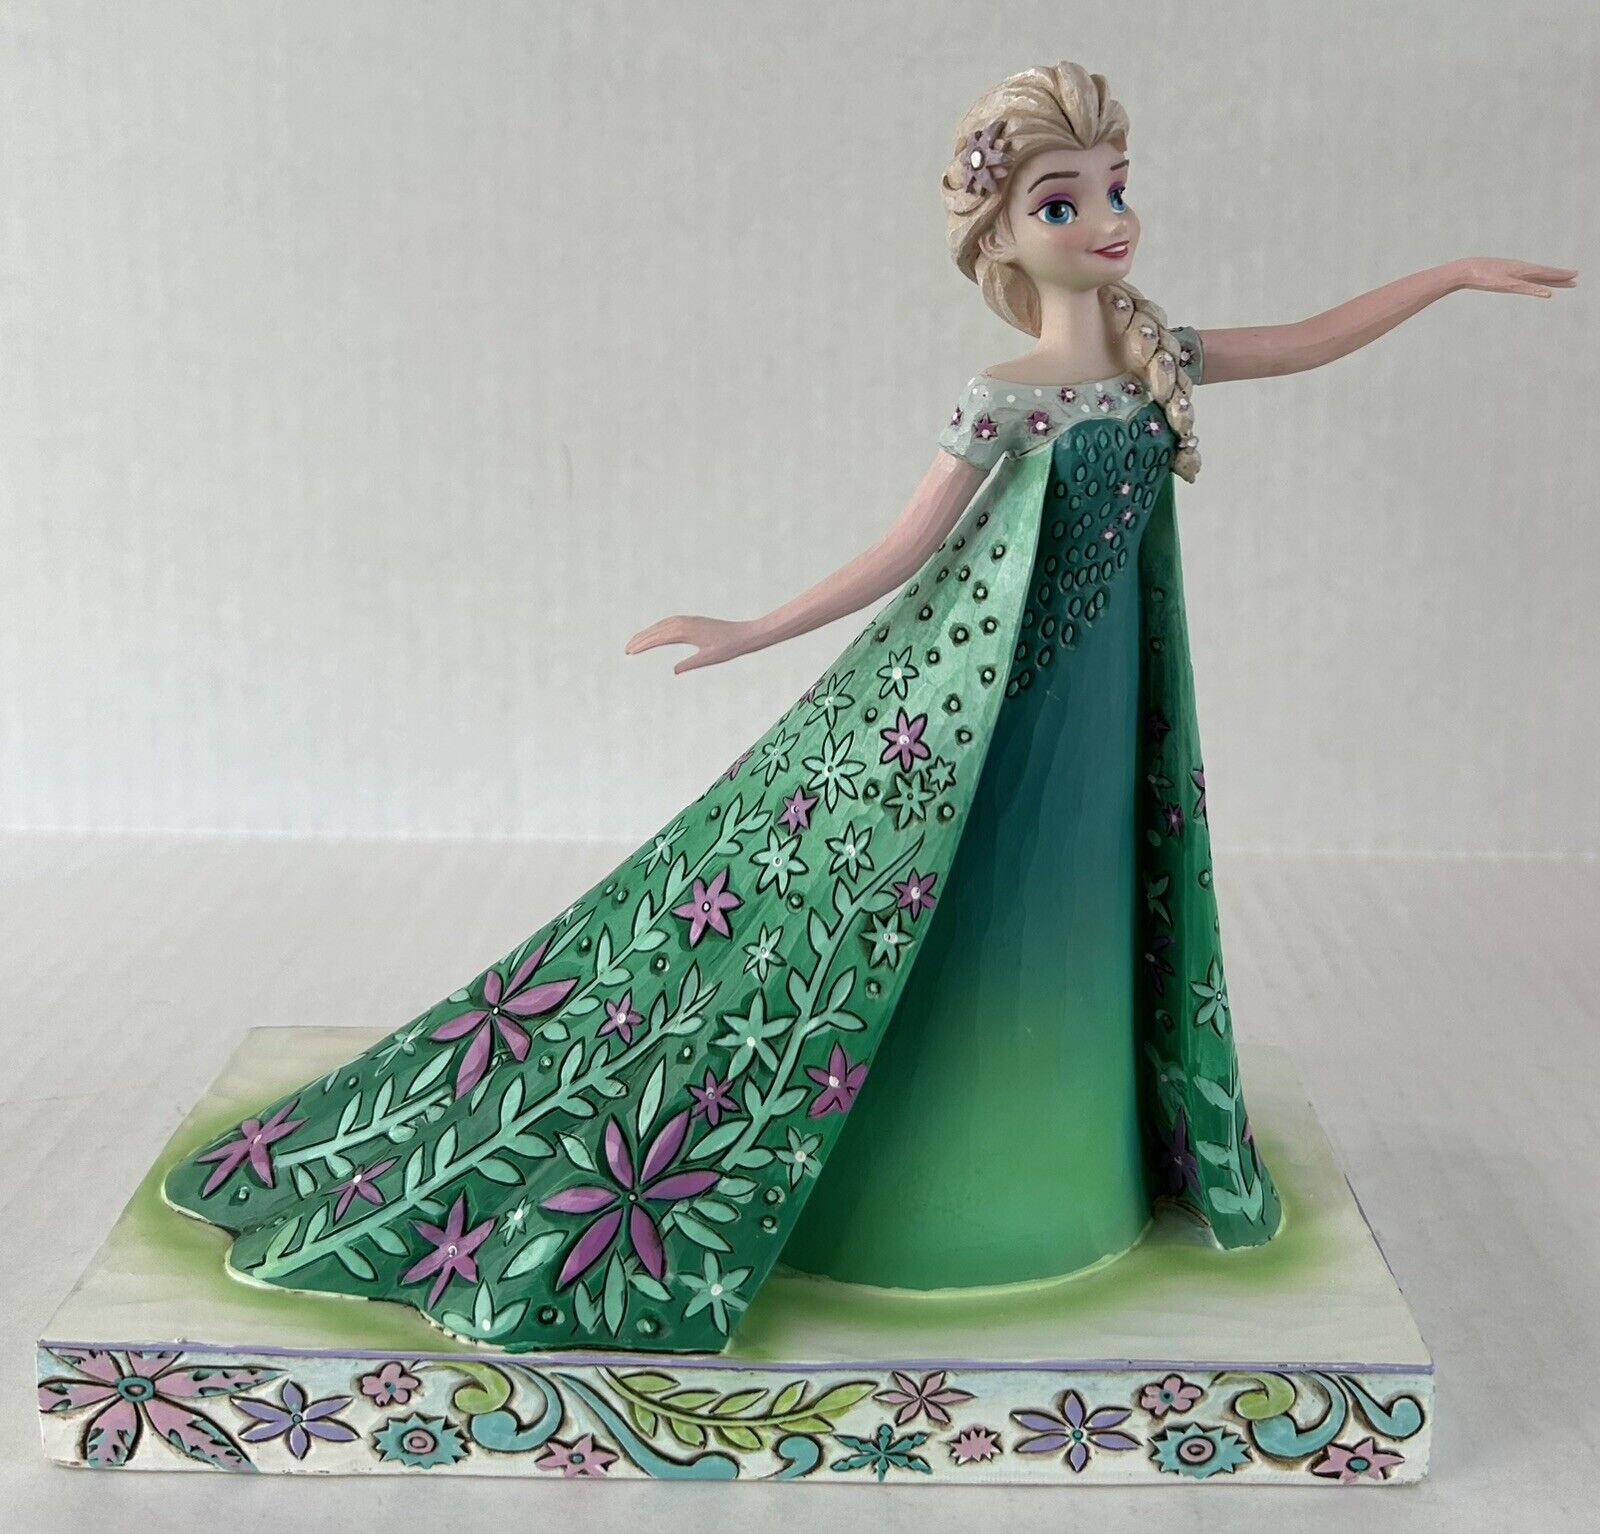 Walt Disney Showcase Jim Shore Elsa Frozen Celebration of Spring Figure #4050881